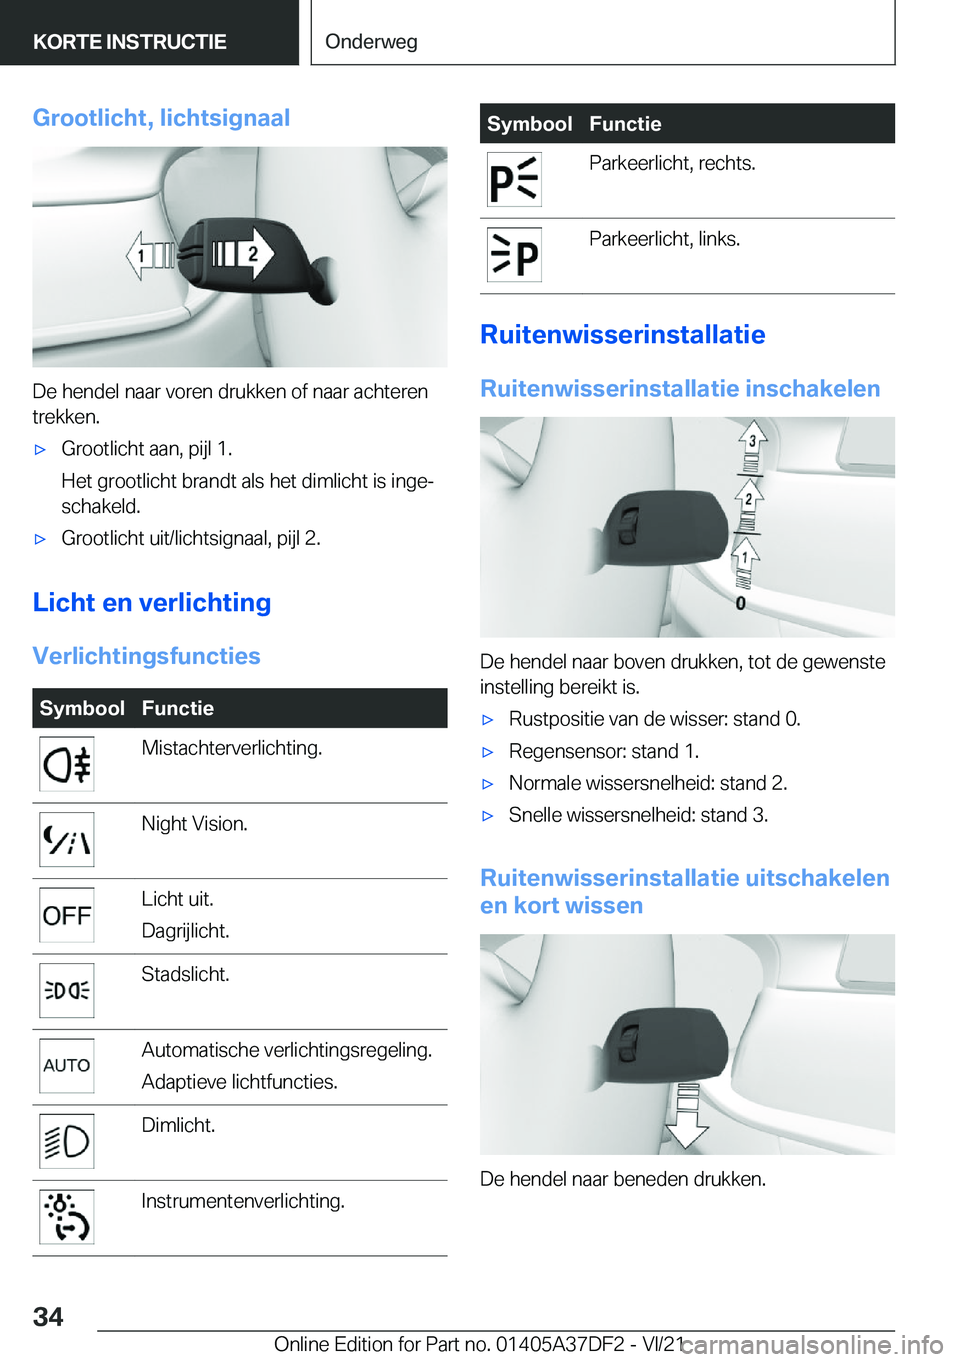 BMW M8 GRAN COUPE 2022  Instructieboekjes (in Dutch) �G�r�o�o�t�l�i�c�h�t�,��l�i�c�h�t�s�i�g�n�a�a�l
�D�e��h�e�n�d�e�l��n�a�a�r��v�o�r�e�n��d�r�u�k�k�e�n��o�f��n�a�a�r��a�c�h�t�e�r�e�n�t�r�e�k�k�e�n�.
'x�G�r�o�o�t�l�i�c�h�t��a�a�n�,��p�i�j